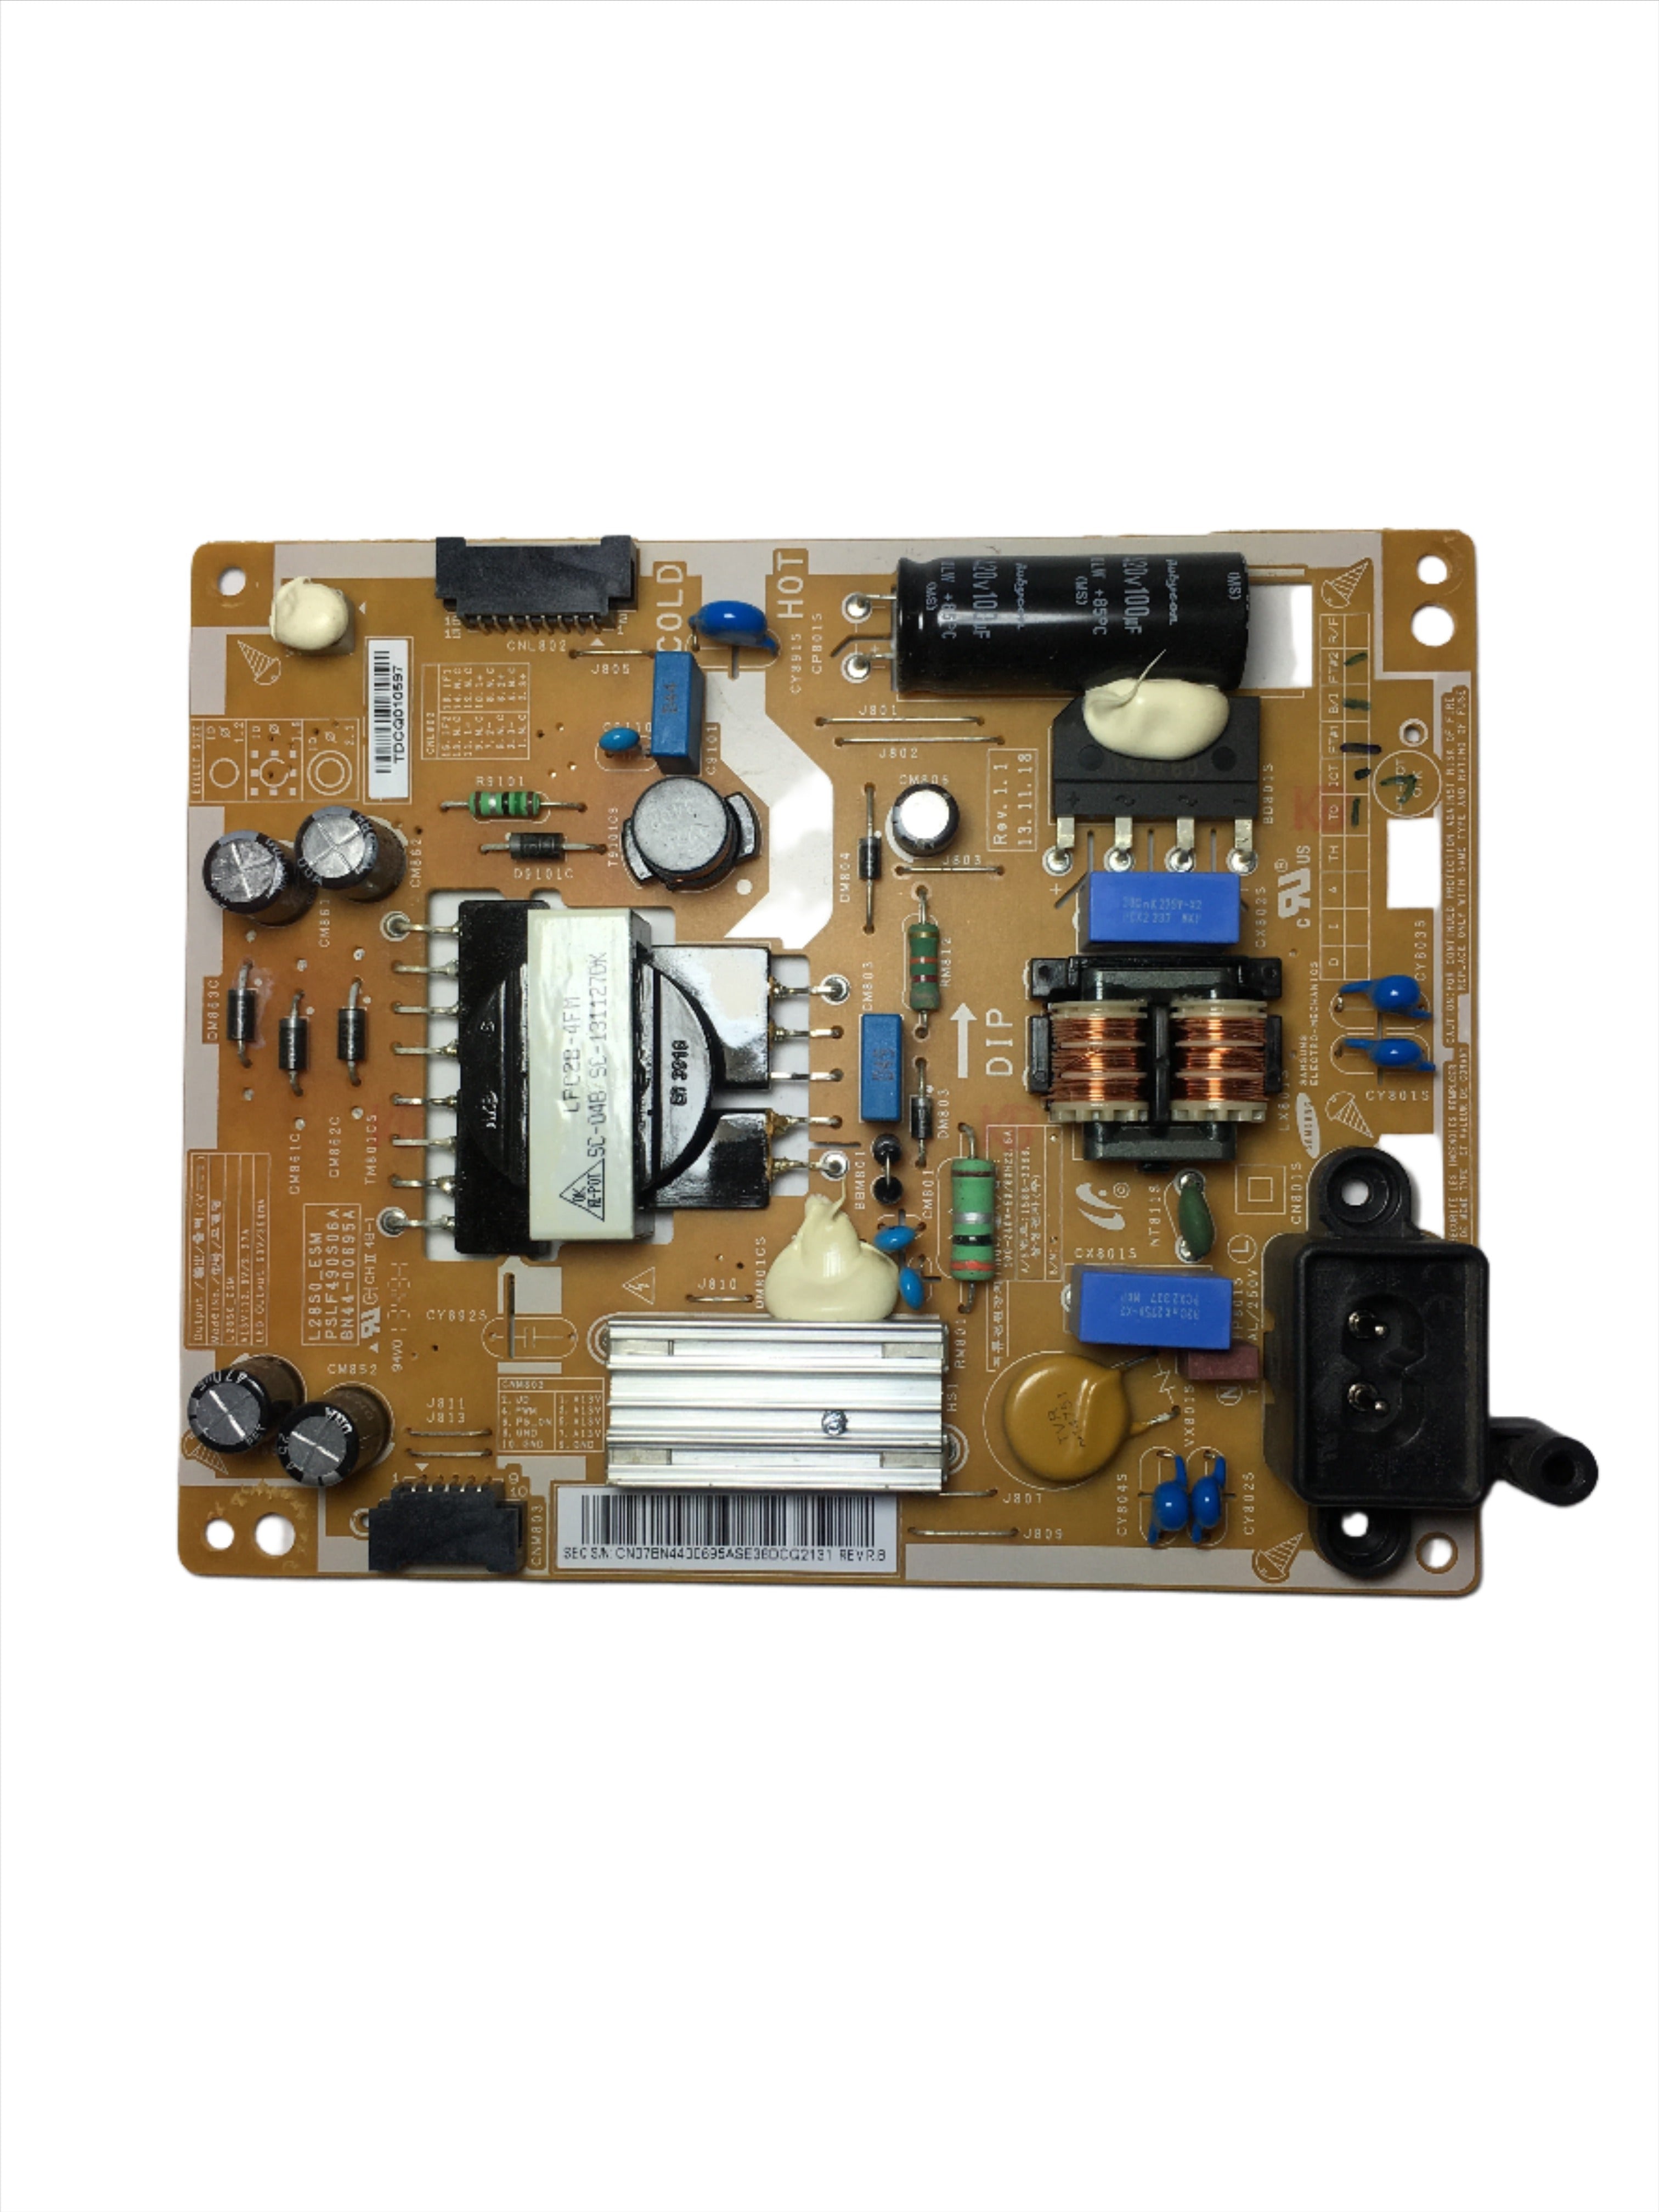 Samsung BN44-00695A Power Supply / LED Board for UN28H4000/UN28H4500